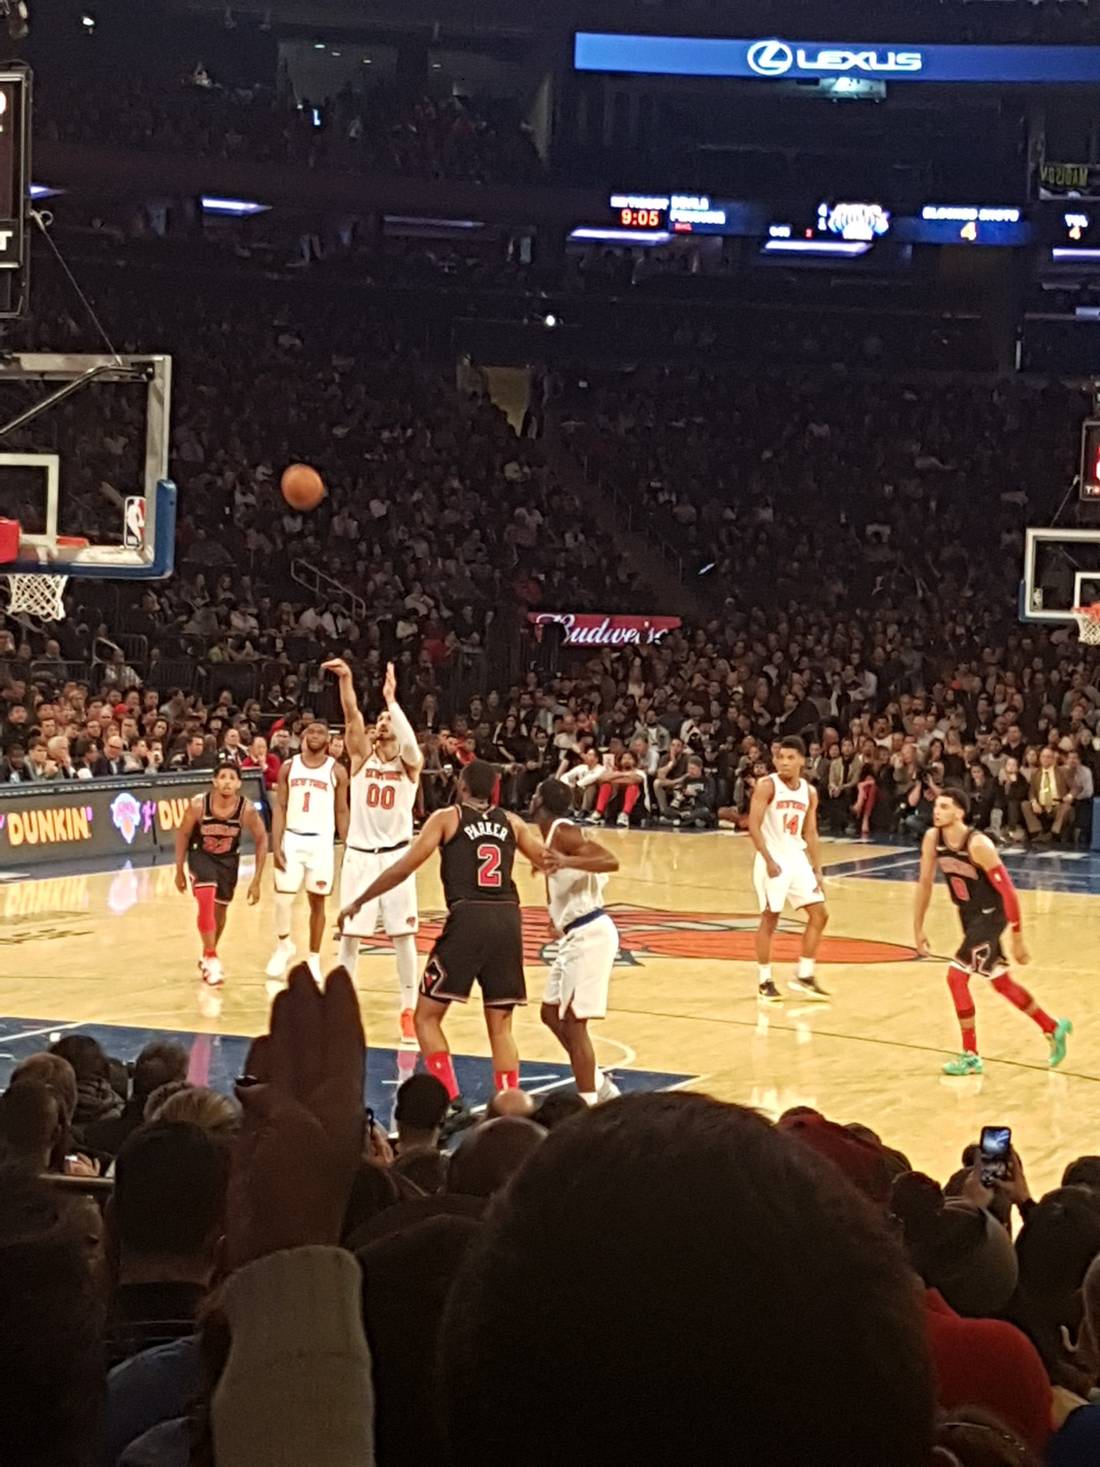 New York Knicks vs Chicago Bulls at the Madison Square Garden